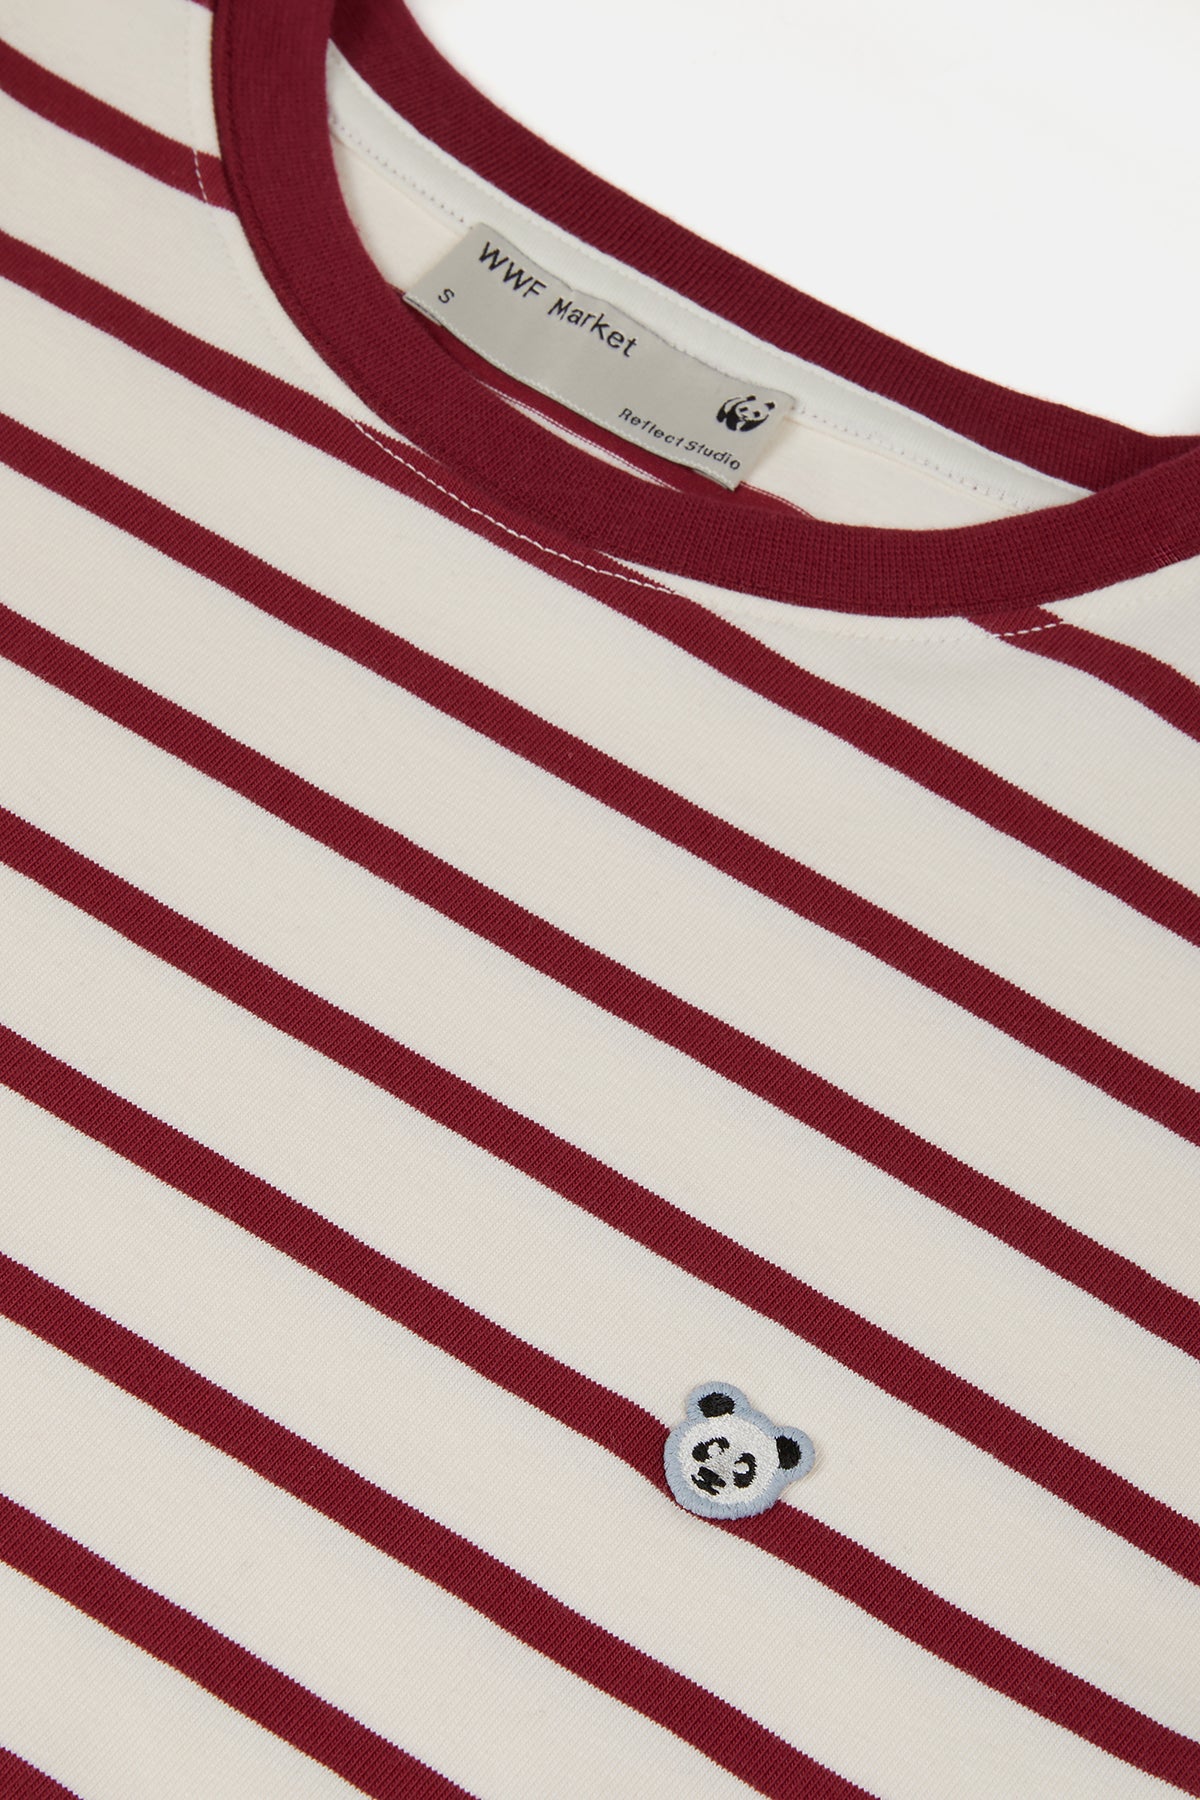 Panda Supreme Çizgili T-Shirt - Kırmızı/Krem